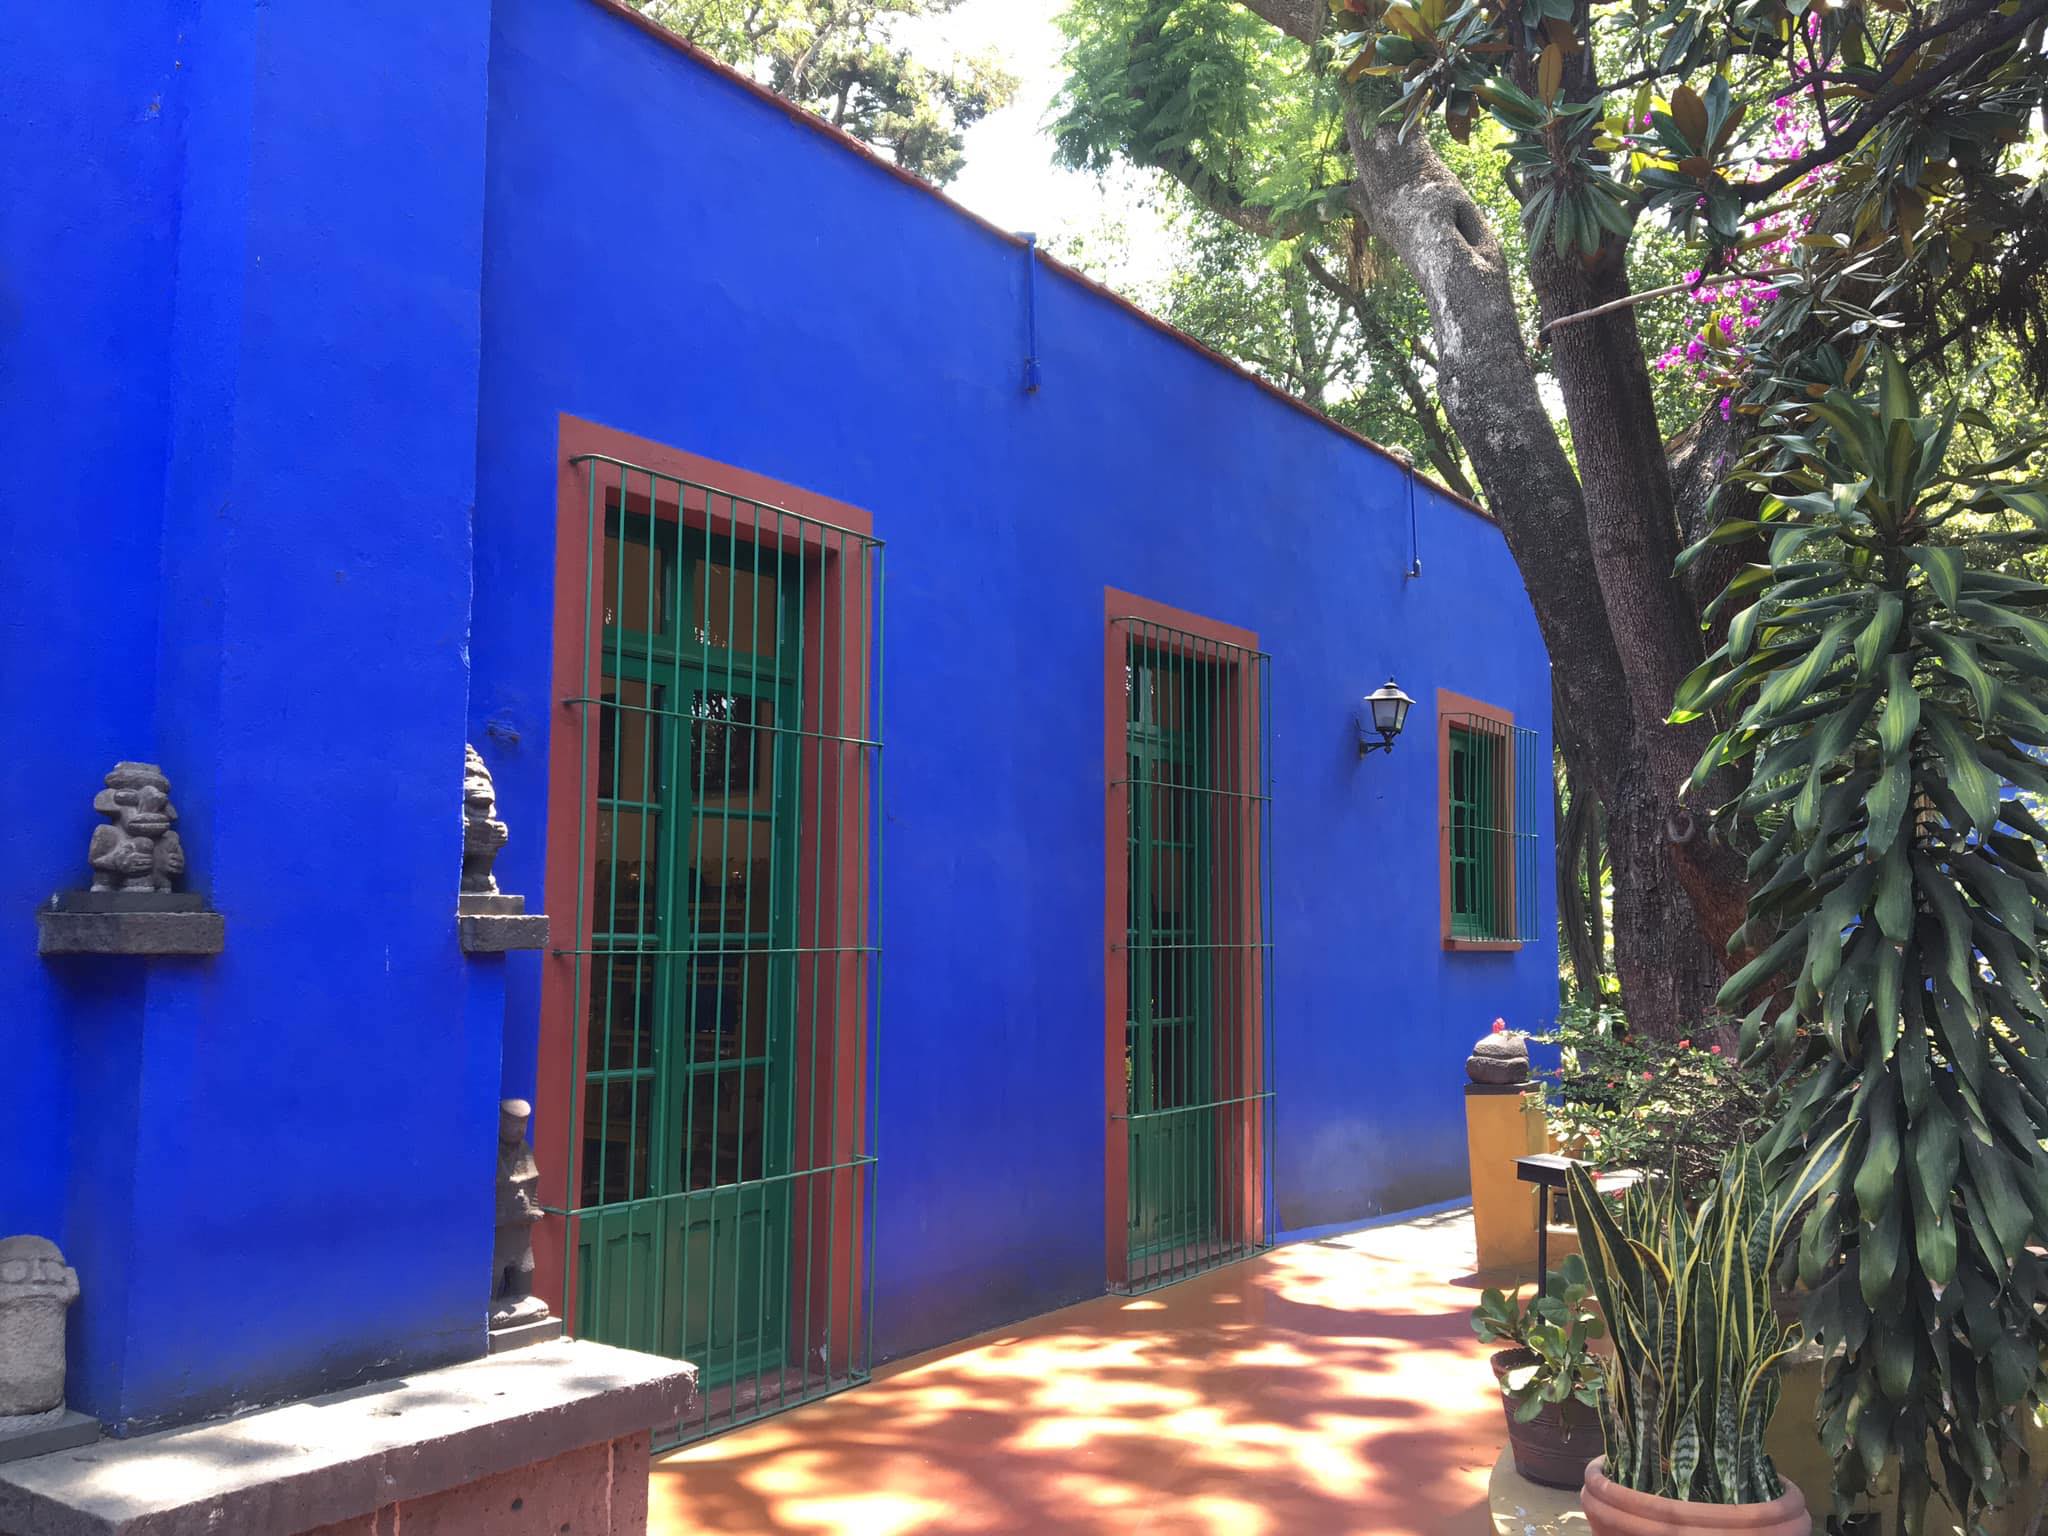 Casa Azul, Frida Kahlo